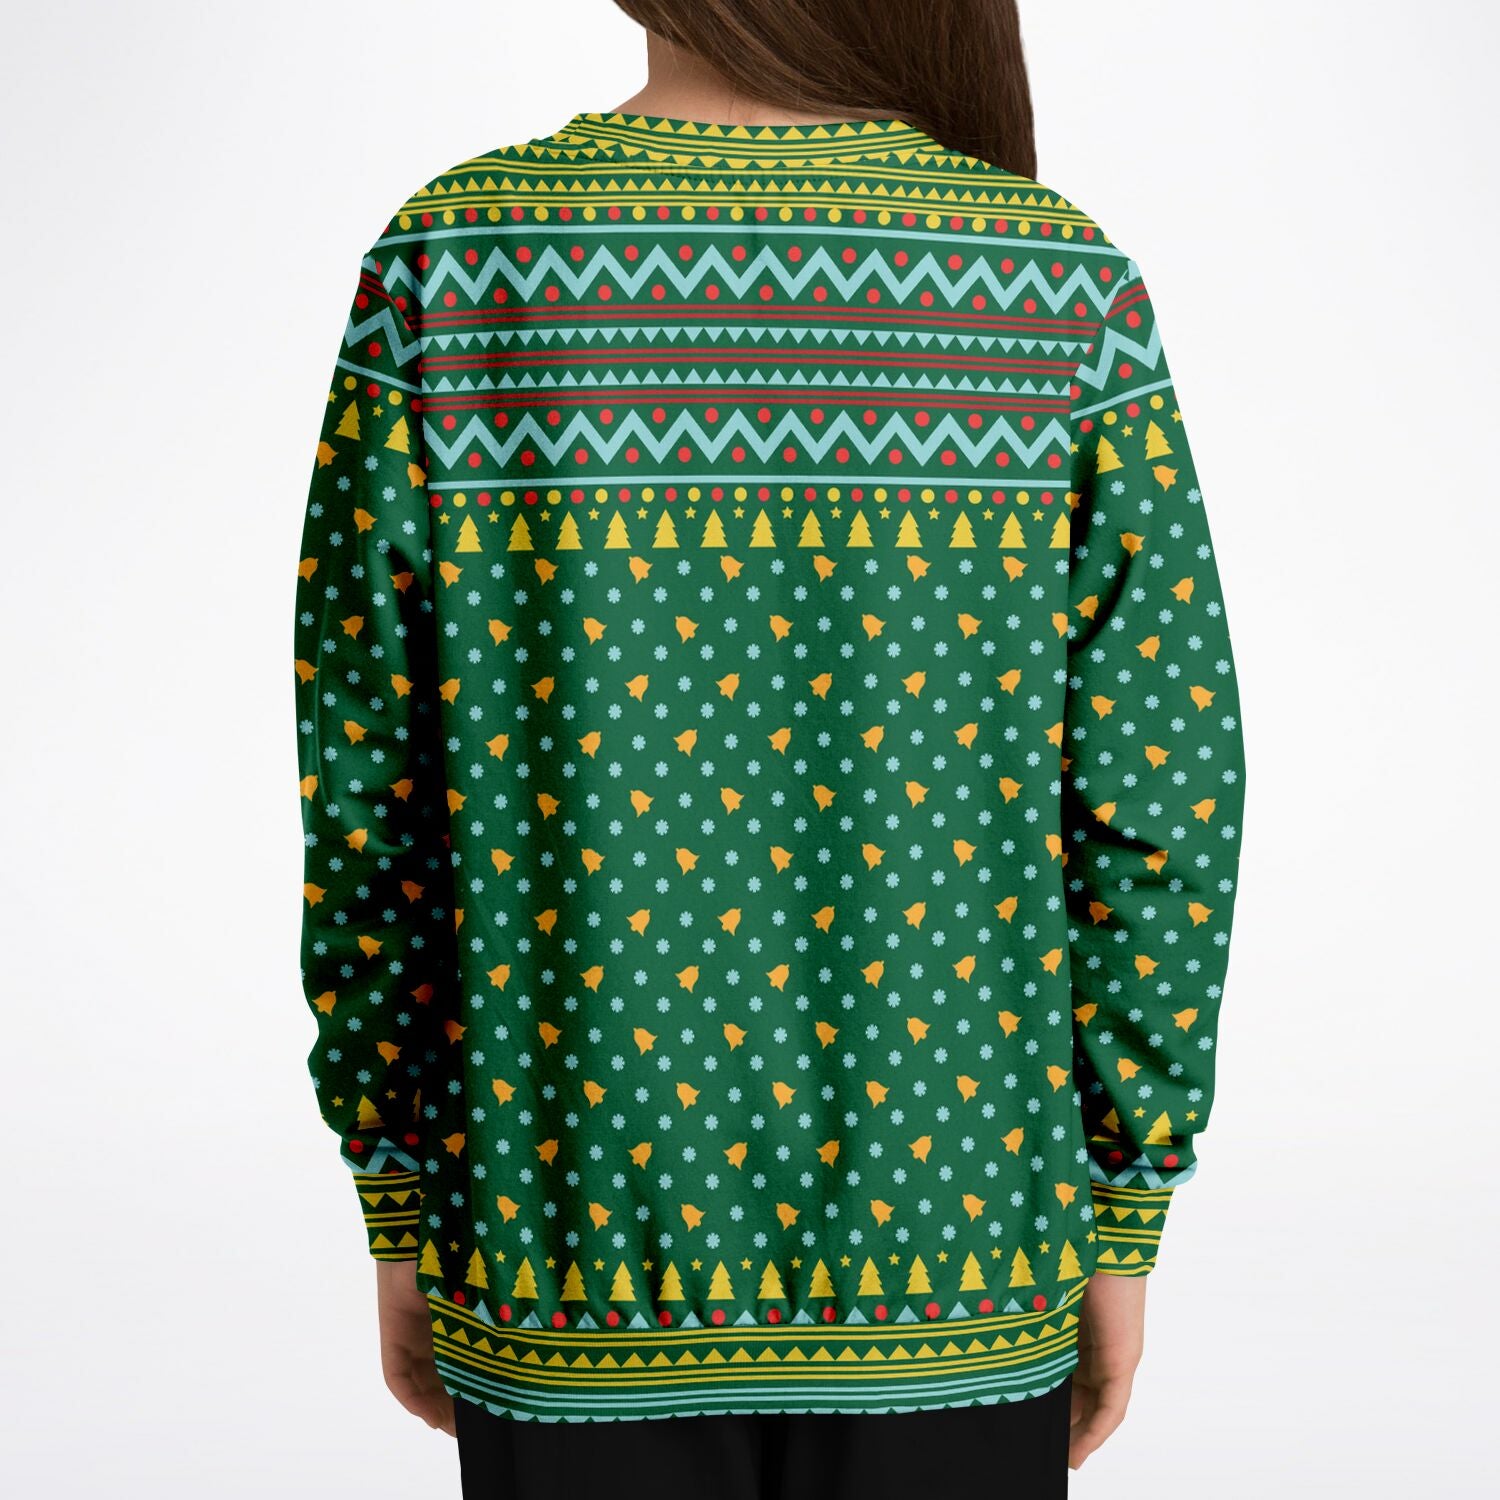 Ugly Holiday Sweater-Merry DeerMas-Humorous-Kids/Youth